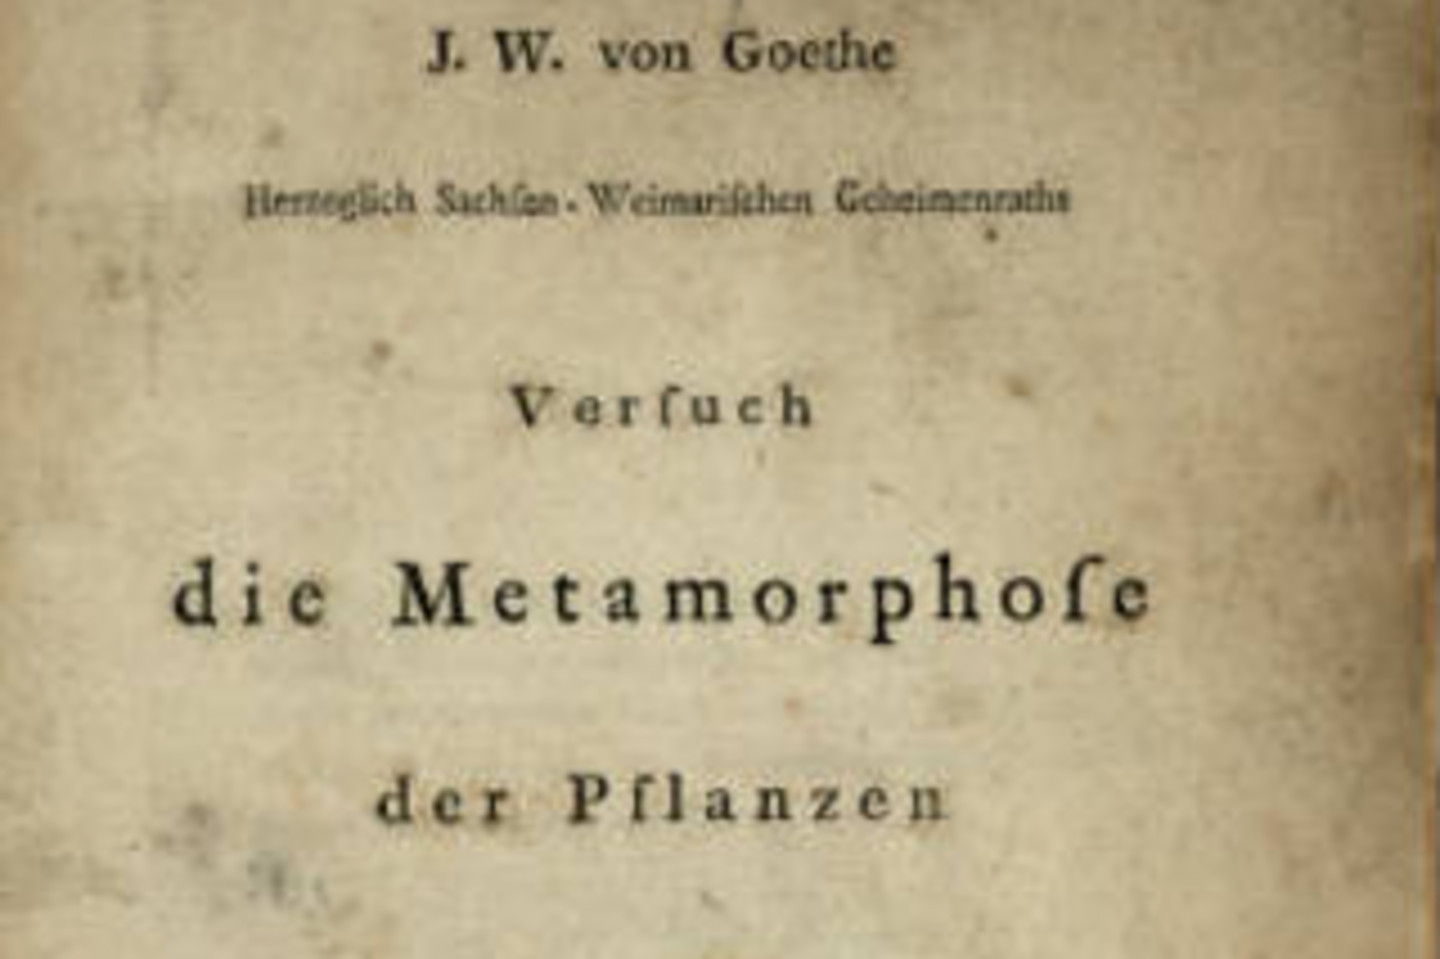 Goethe als Botaniker (Philosophia, Botanica)